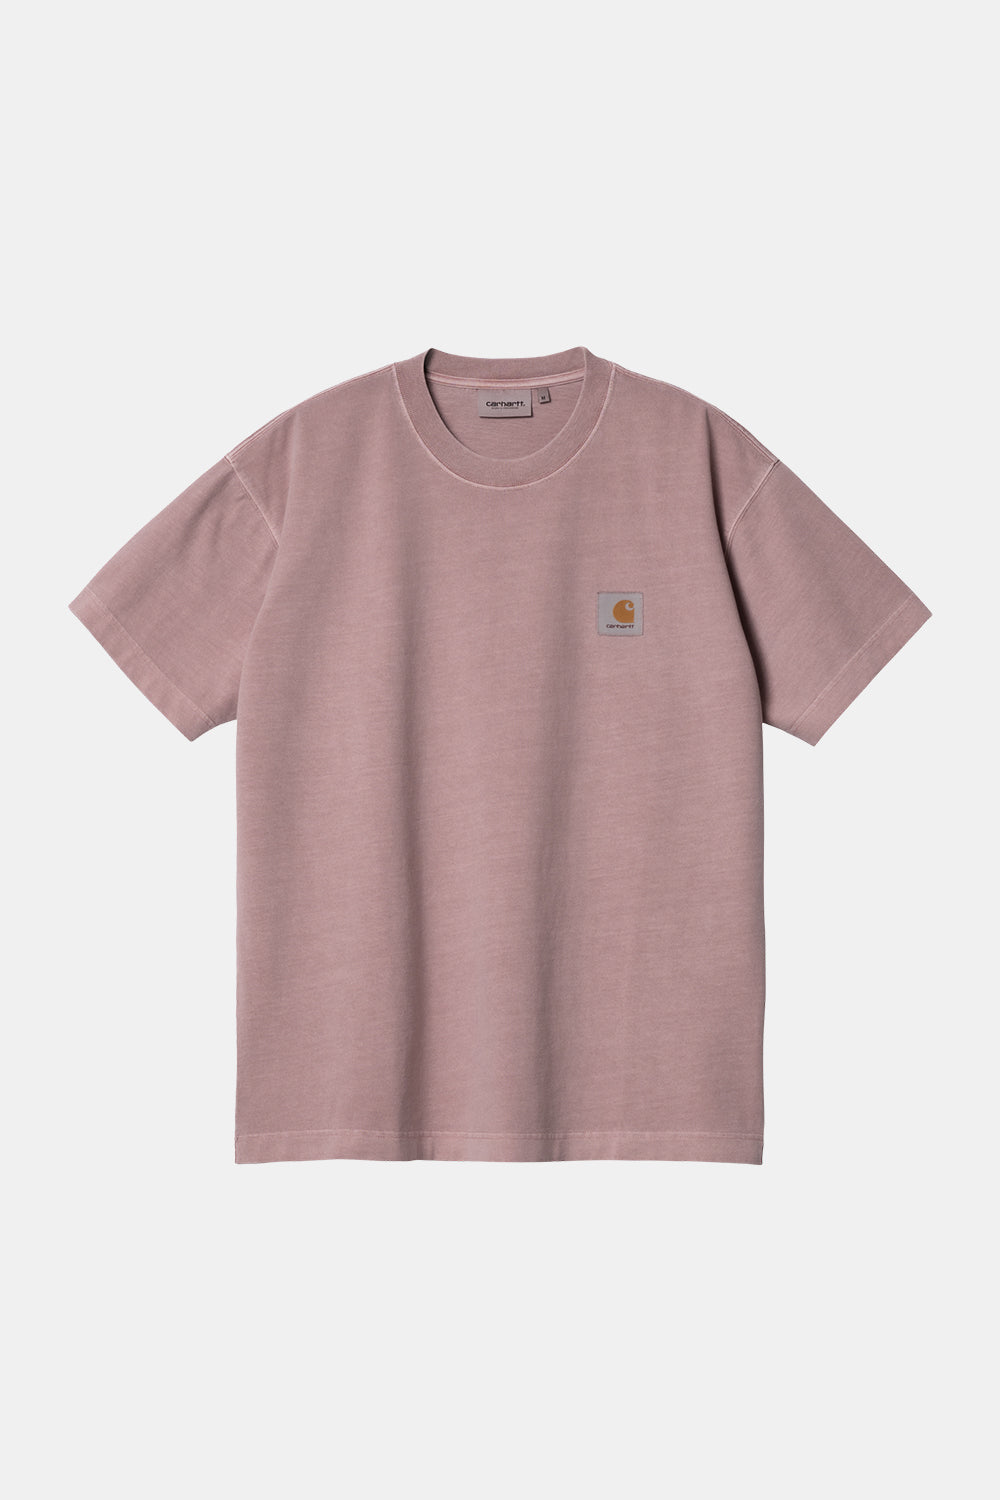 Carhartt WIP Vista Garment Dyed T-shirt (Glassy Pink)